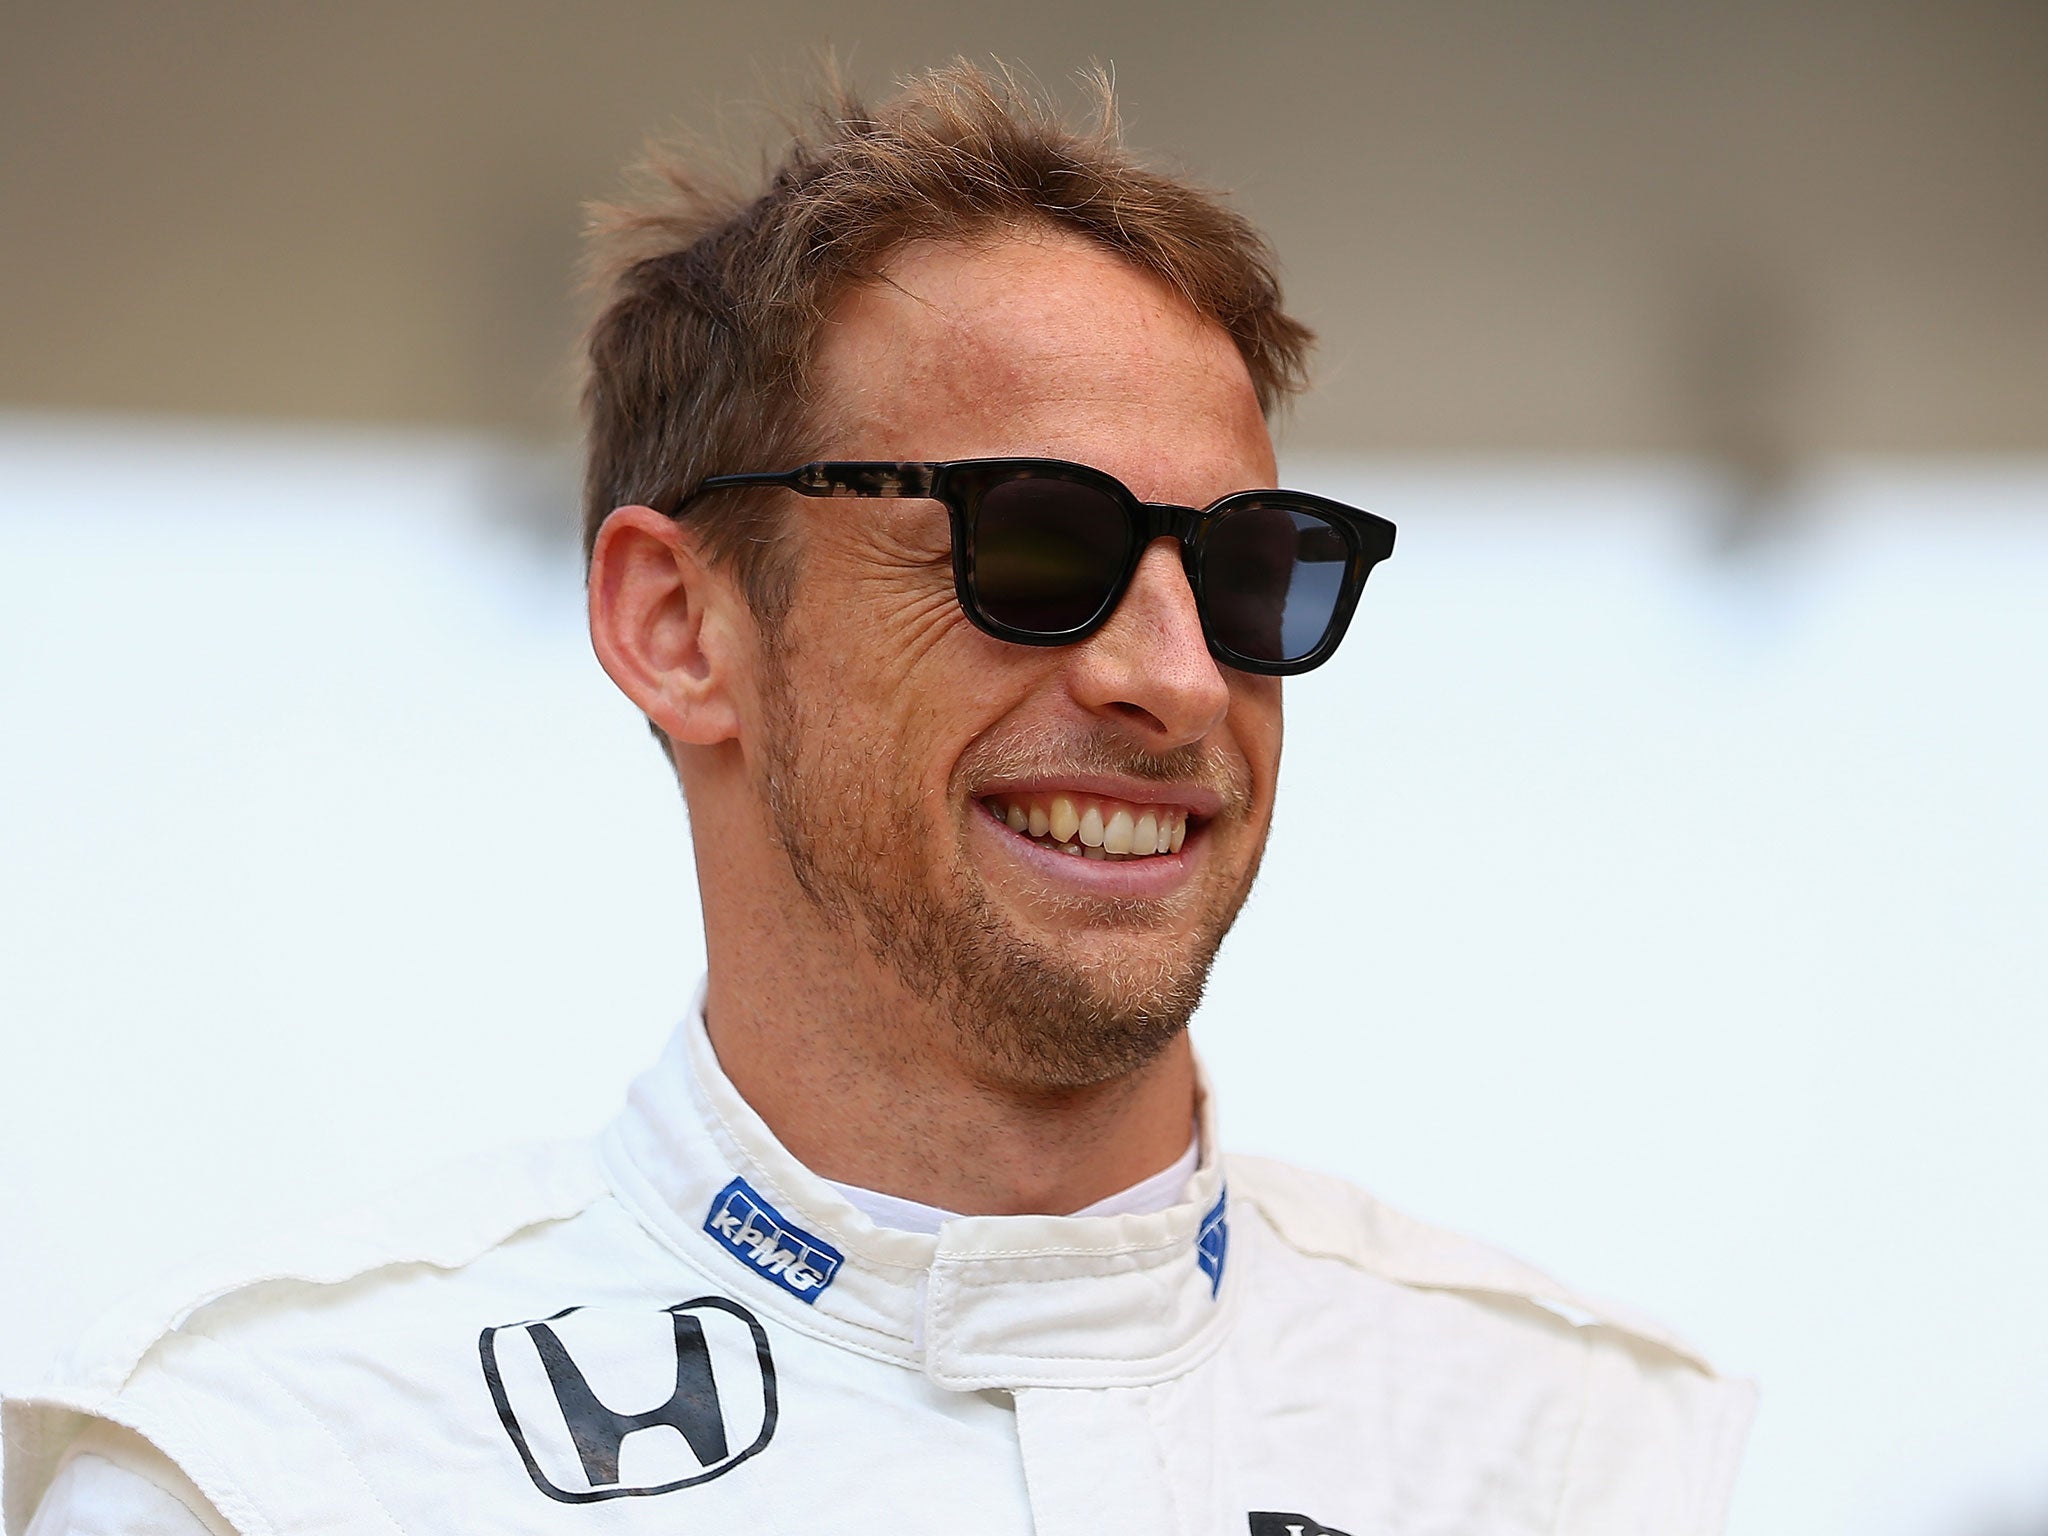 McLaren-Honda driver Jenson Button